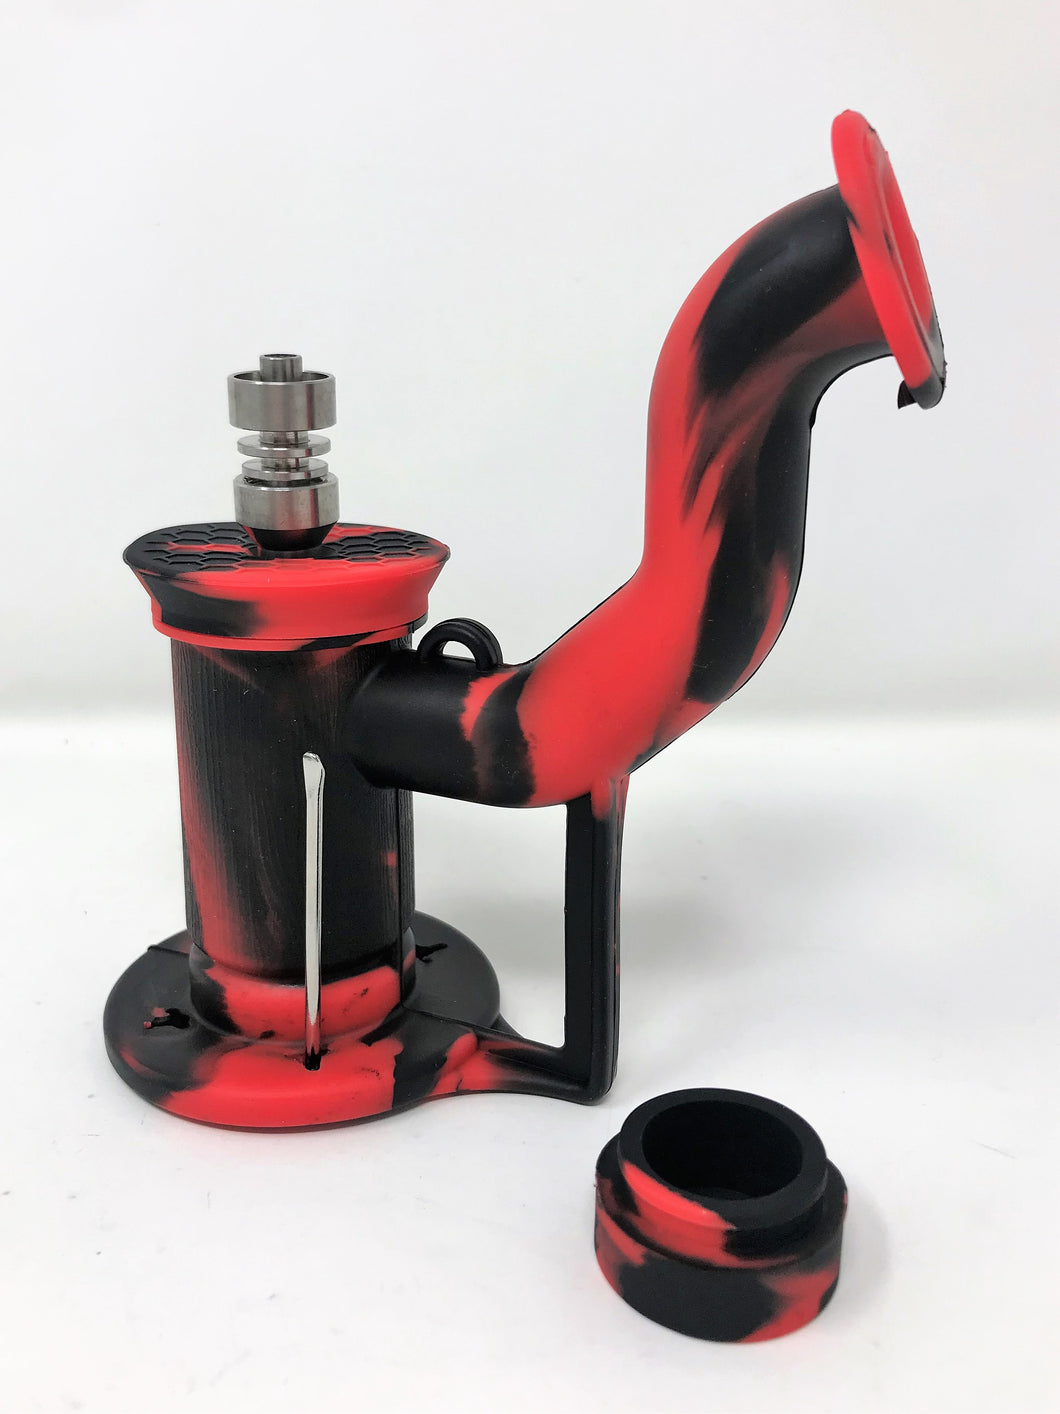 New Portable Silicone Water Pipe Hookah Smoking Pipe Rig+ Spoon Tool - Red n' Black